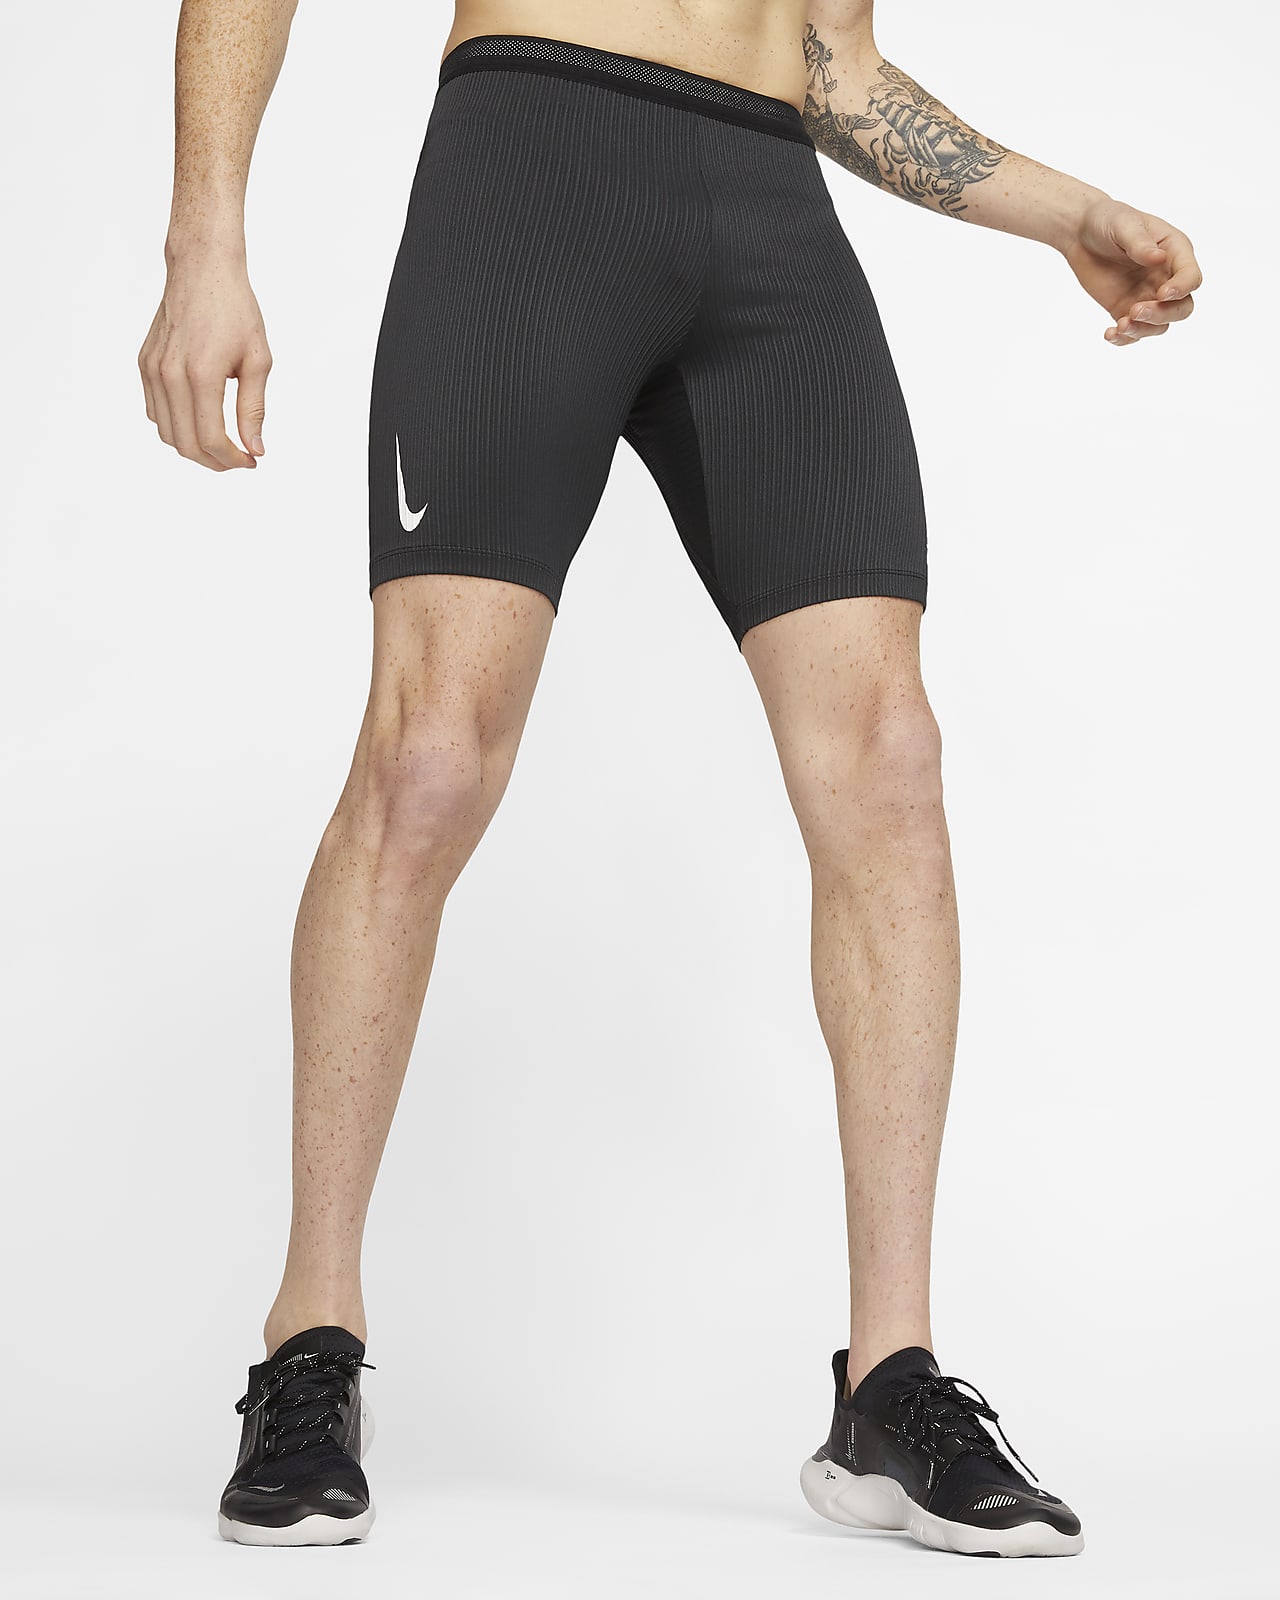 nike pro compression shorts men's size chart